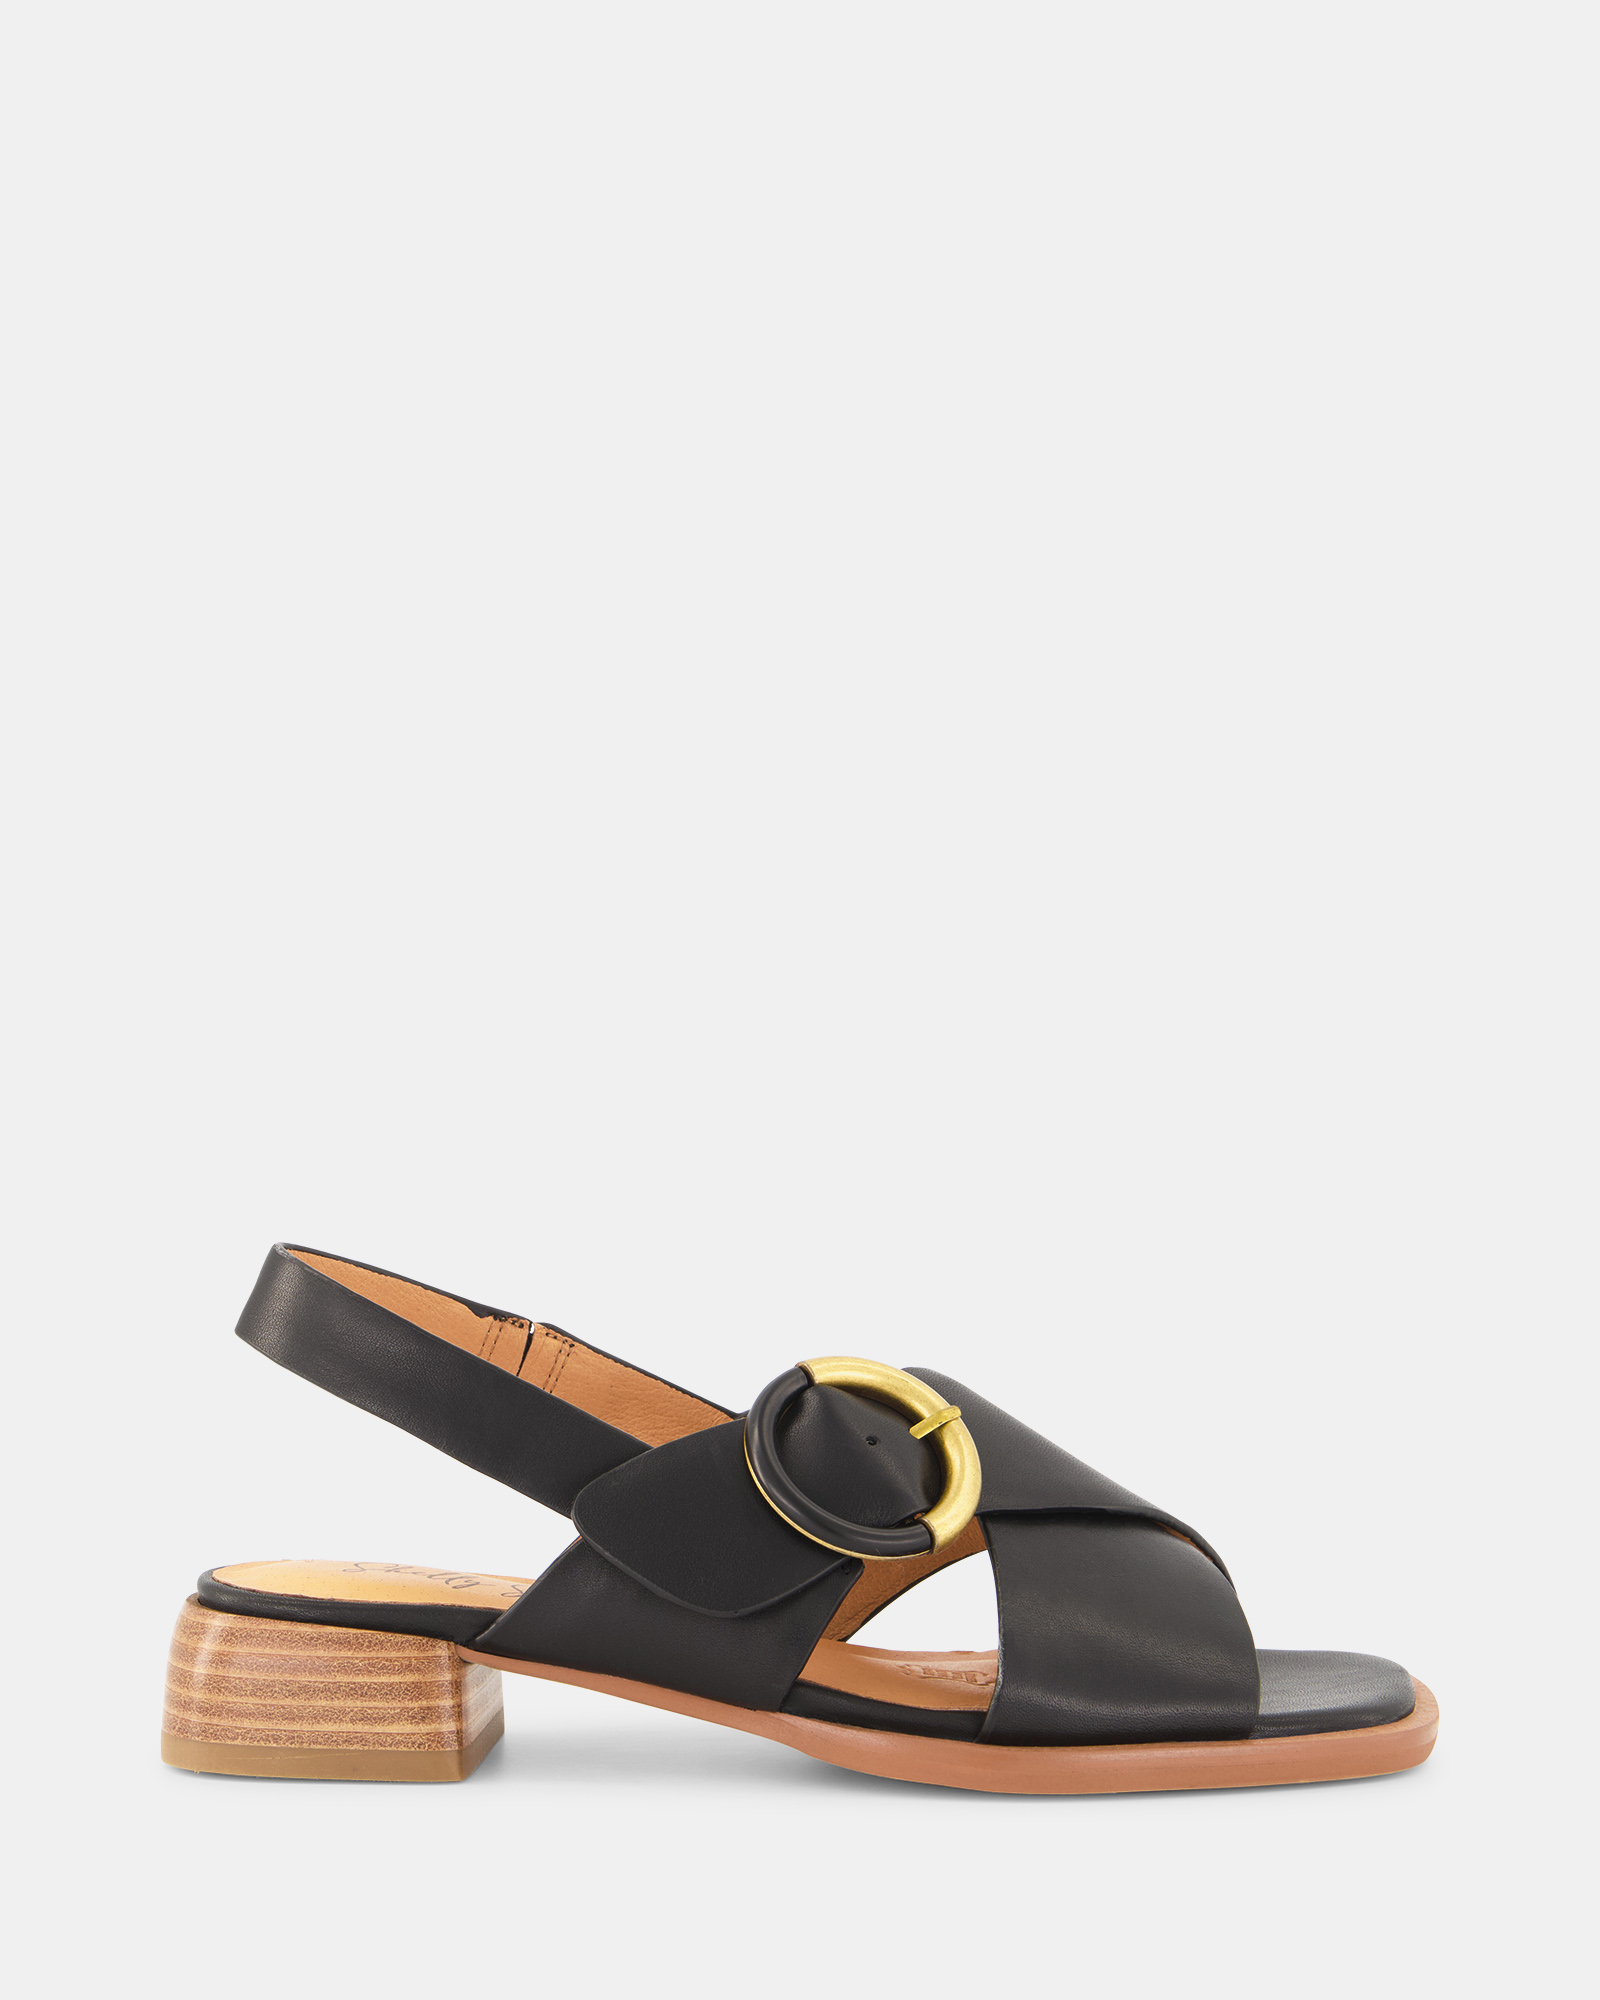 Buy MILA Black sandals Online at Shoe Connection